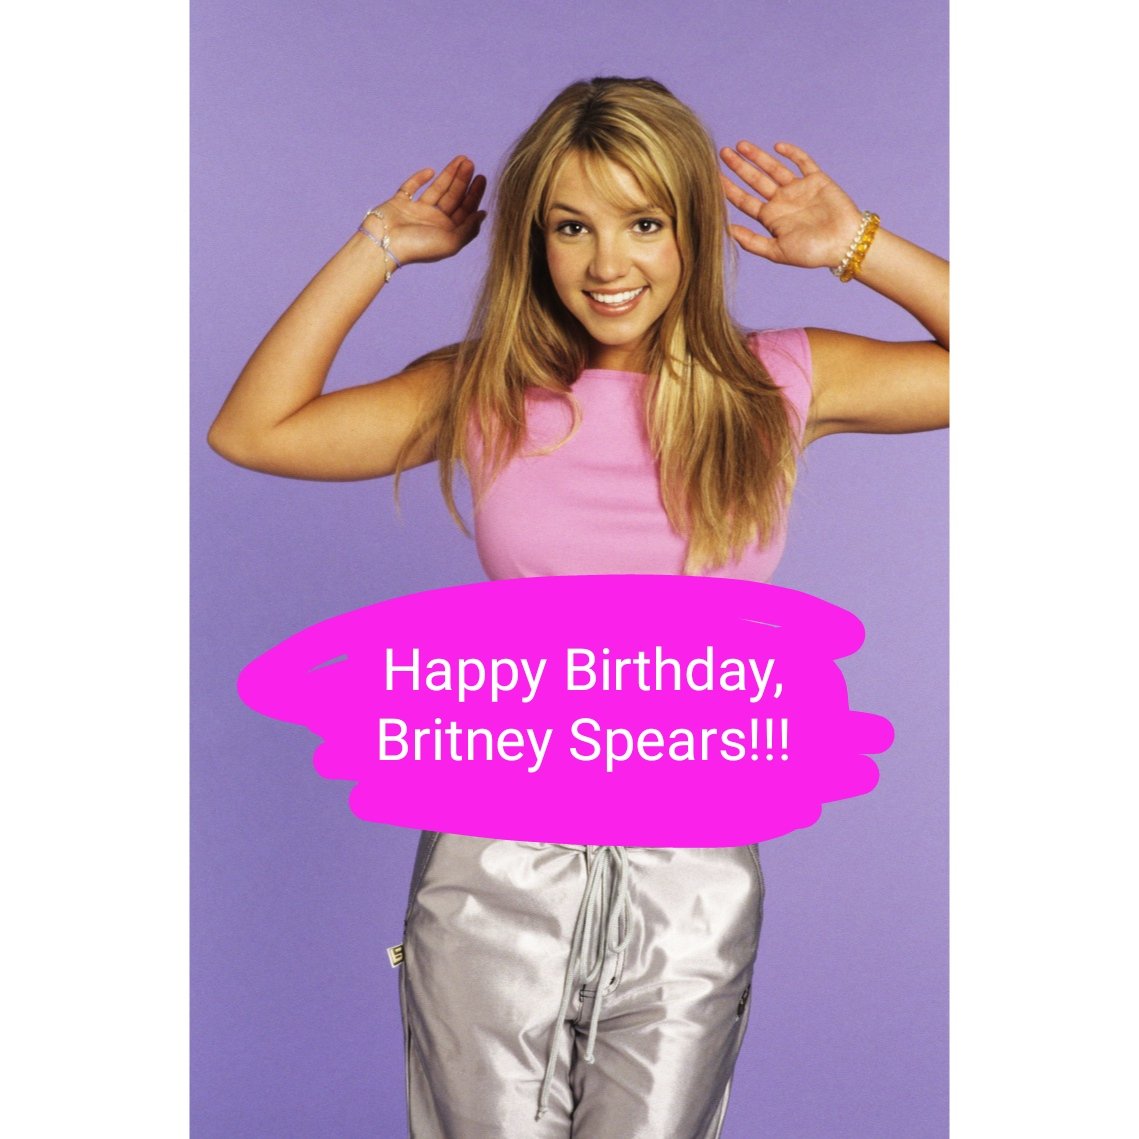 Happy 42nd Birthday, Mrs. Legendary @BritneySpears !!! 🎉🎉🎉🎊🎊🎊🎈🎈🎈🎁🎁🎁🍰🍰🍰🎂🎂🎂❤️❤️❤️
2️⃣🔹1️⃣2️⃣🔹1️⃣9️⃣8️⃣1️⃣
#HappyBirthdayBritneySpears
#HappyBirthdayBritney
#BabyOneMoreTime
#Circus
#PrincessOfPop
#PopPrincess
#Toxic
#Overprotected
#BritneyJean
#BritneyJeanSpears